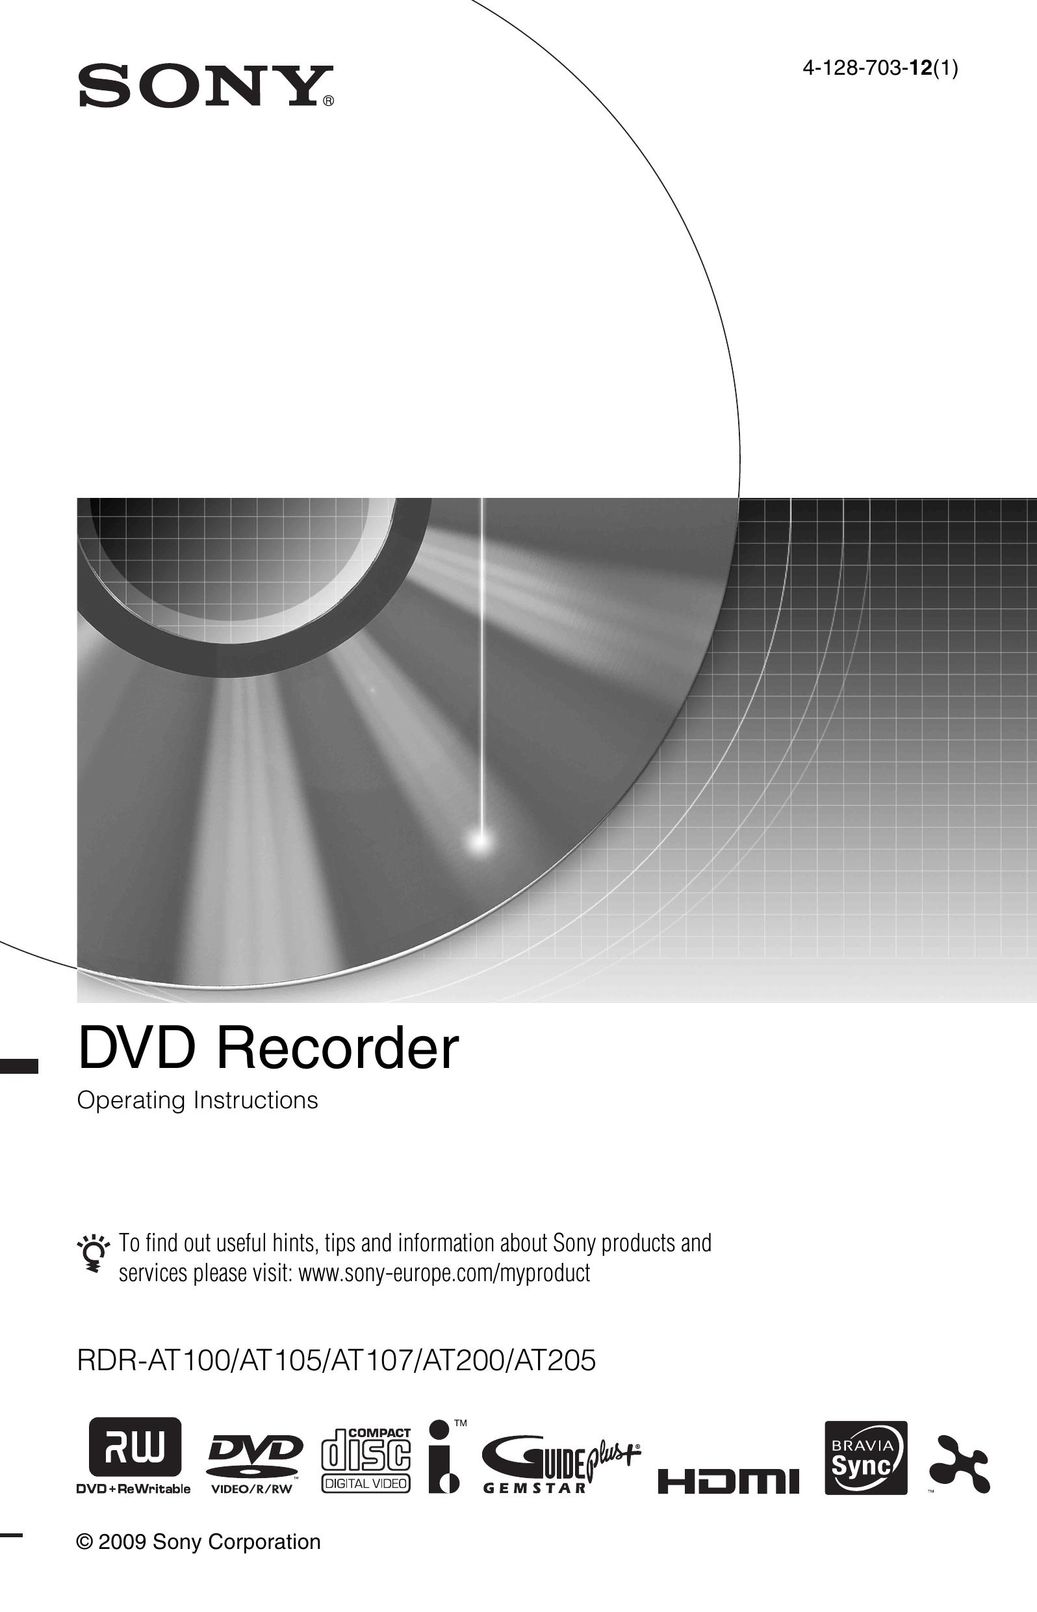 Sony AT205 DVD Recorder User Manual